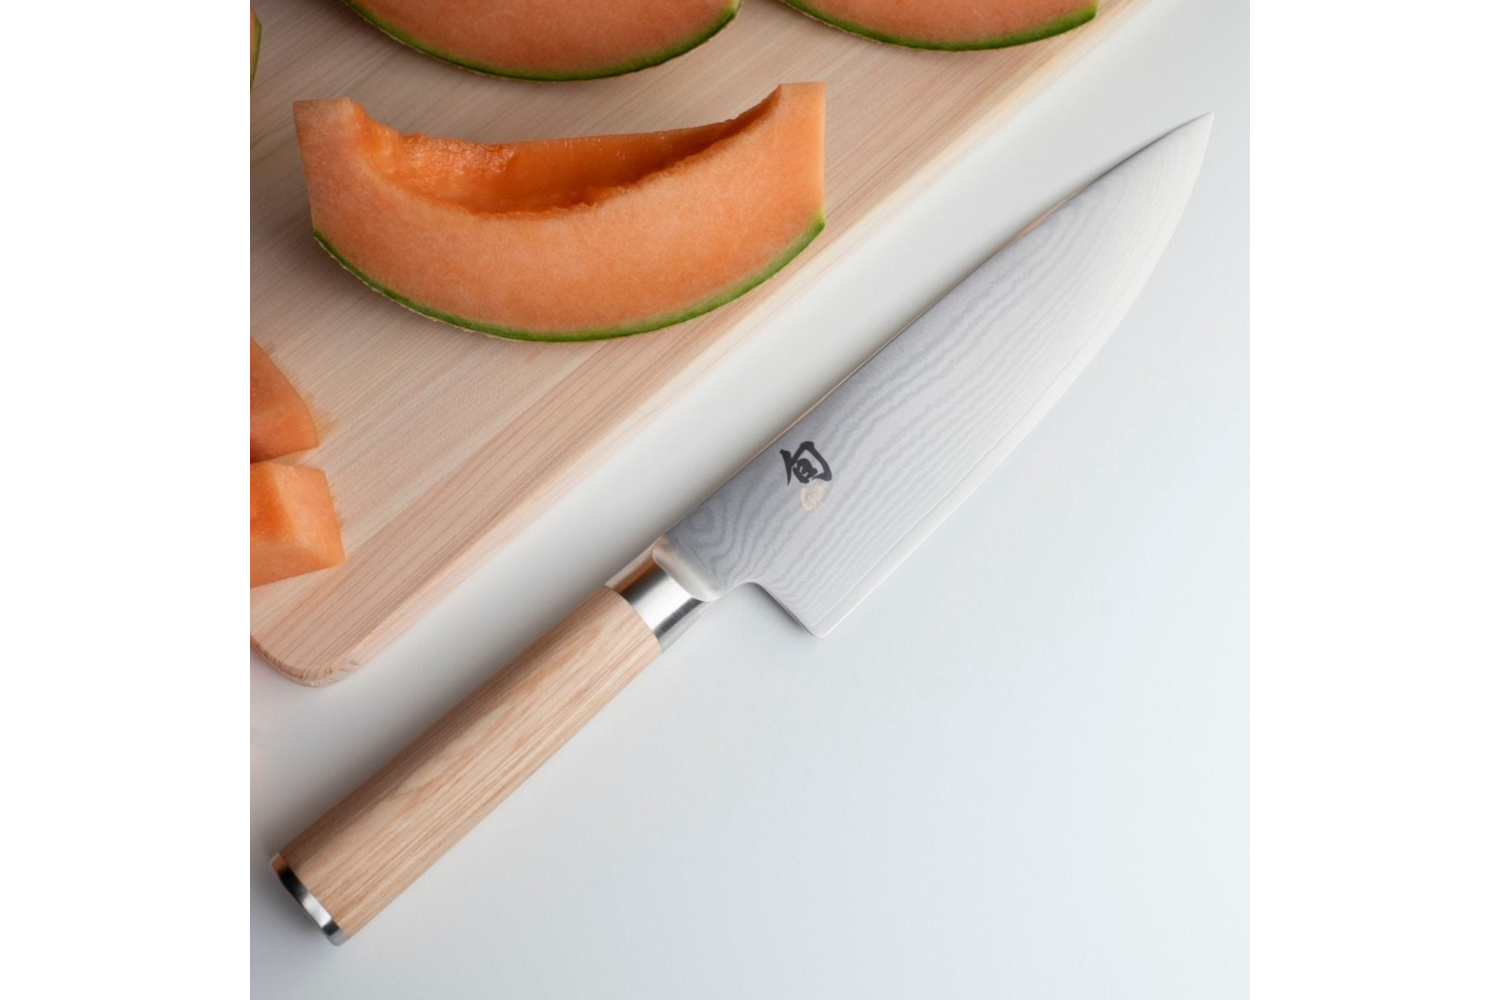 Shun Classic 8 Chef's Knife